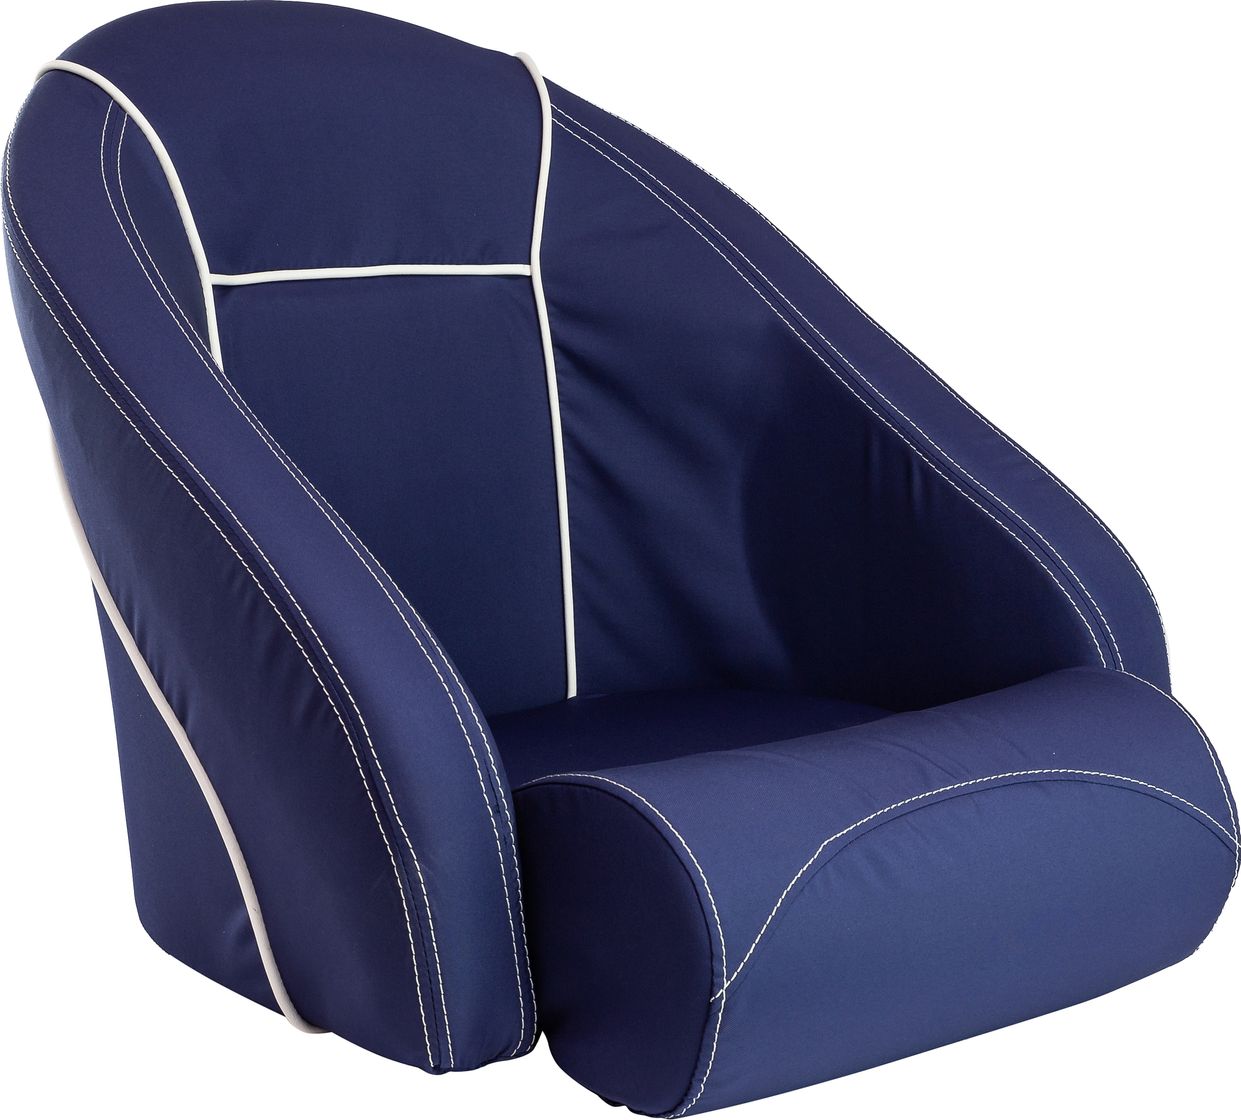 Кресло ROMEO мягкое, подставка, обивка ткань Markilux темно-синяя 118100395 кресло складное мягкое traveler обивка камуфляжная ткань break up 1061106c